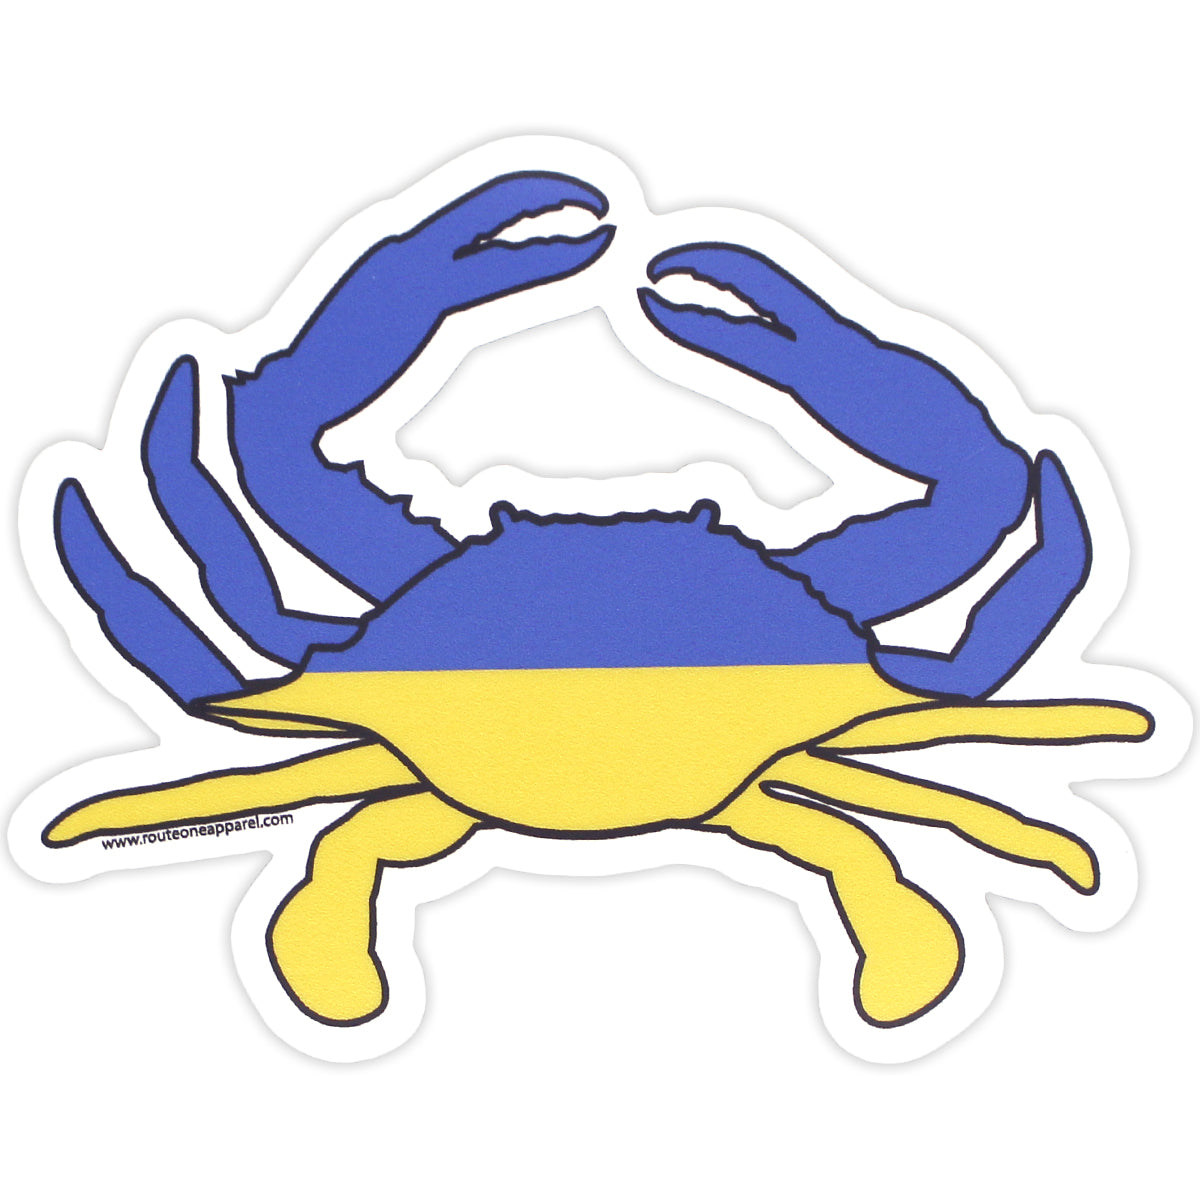 Ukrainian Flag Crab / Sticker - Route One Apparel